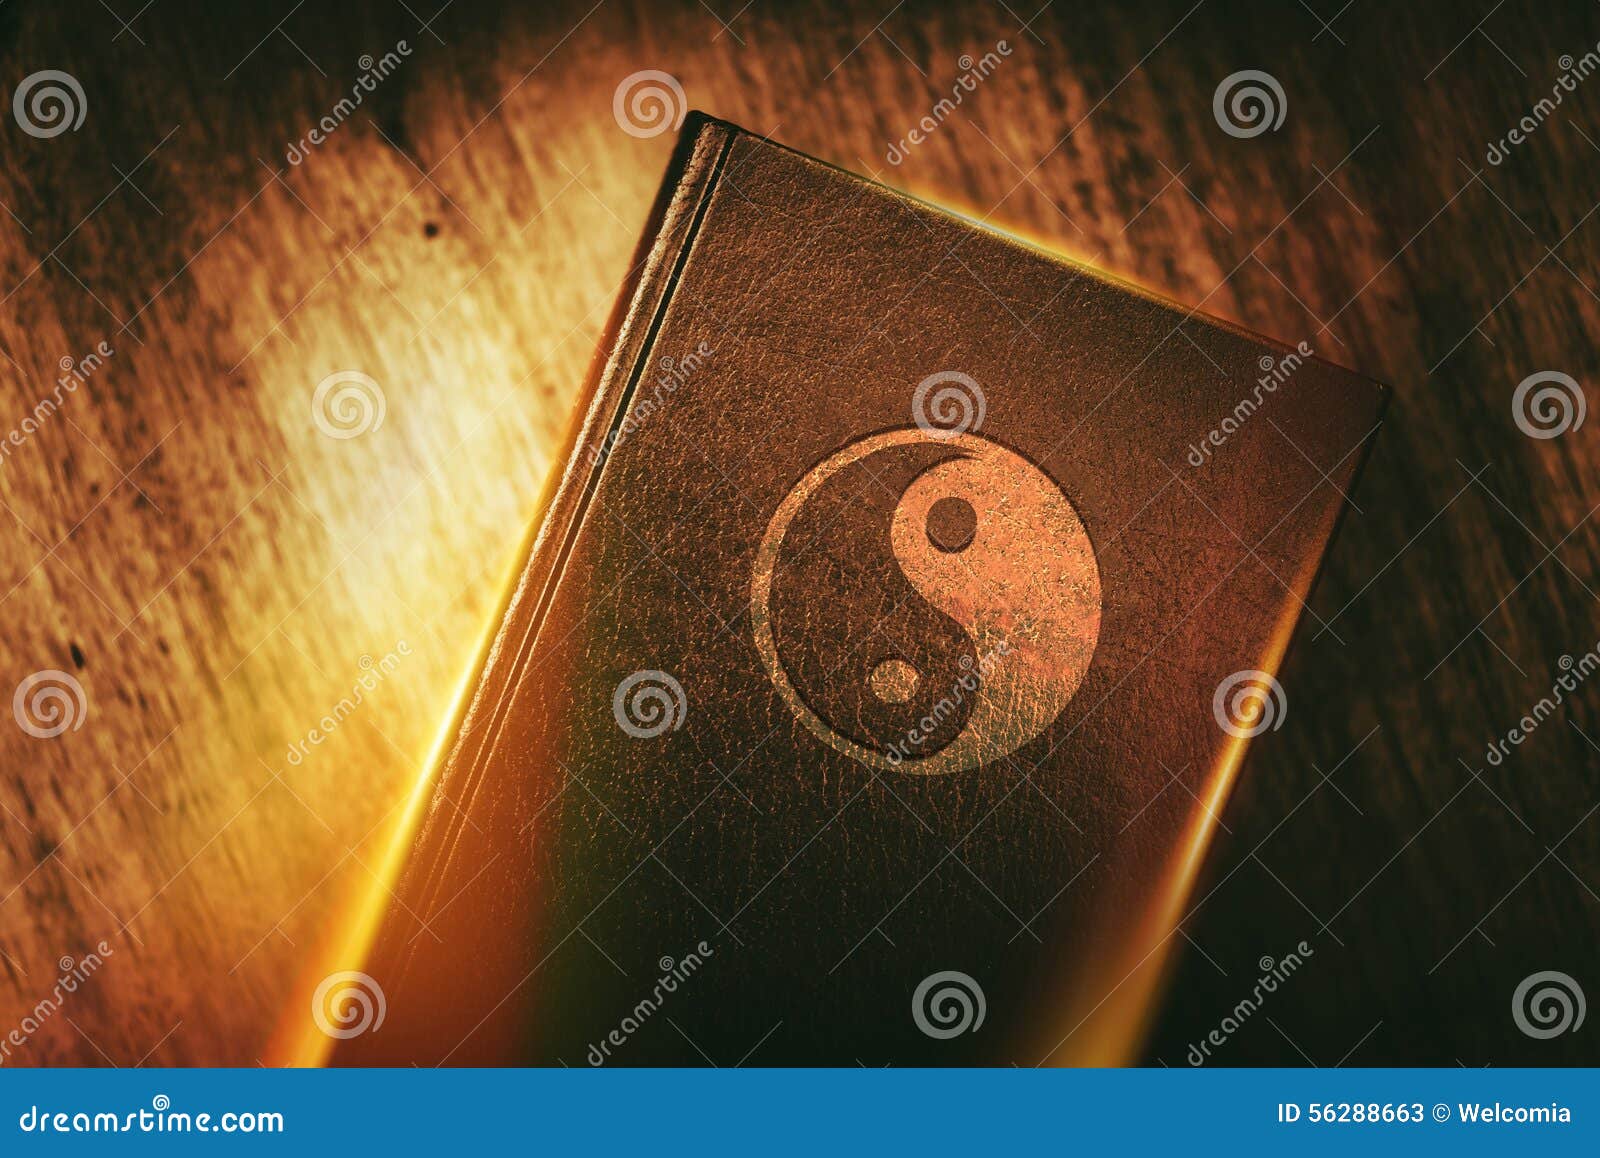 taoism book of harmony